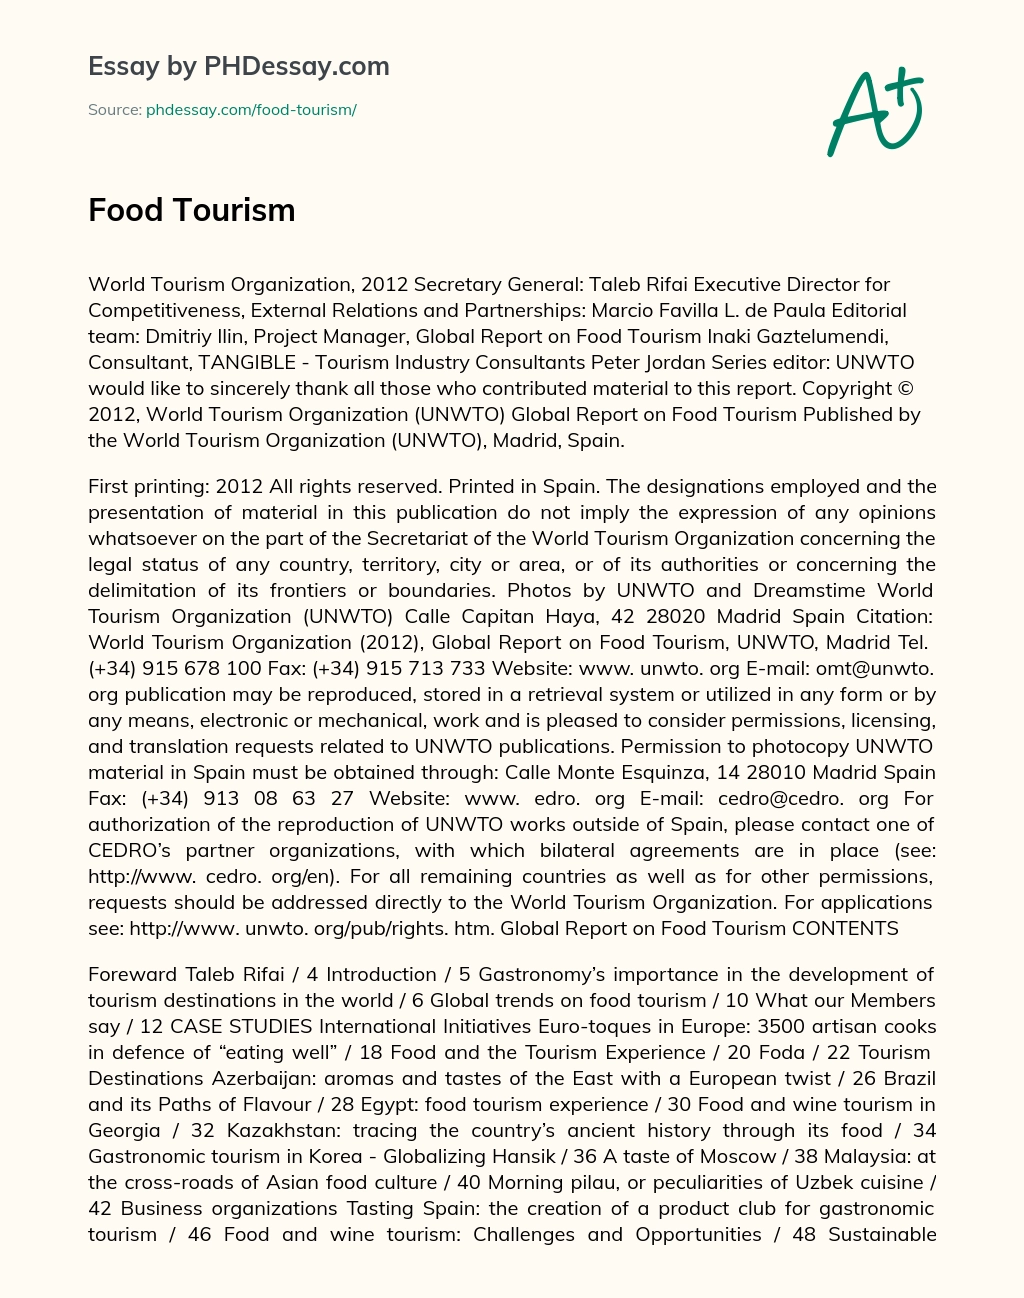 Food Tourism essay